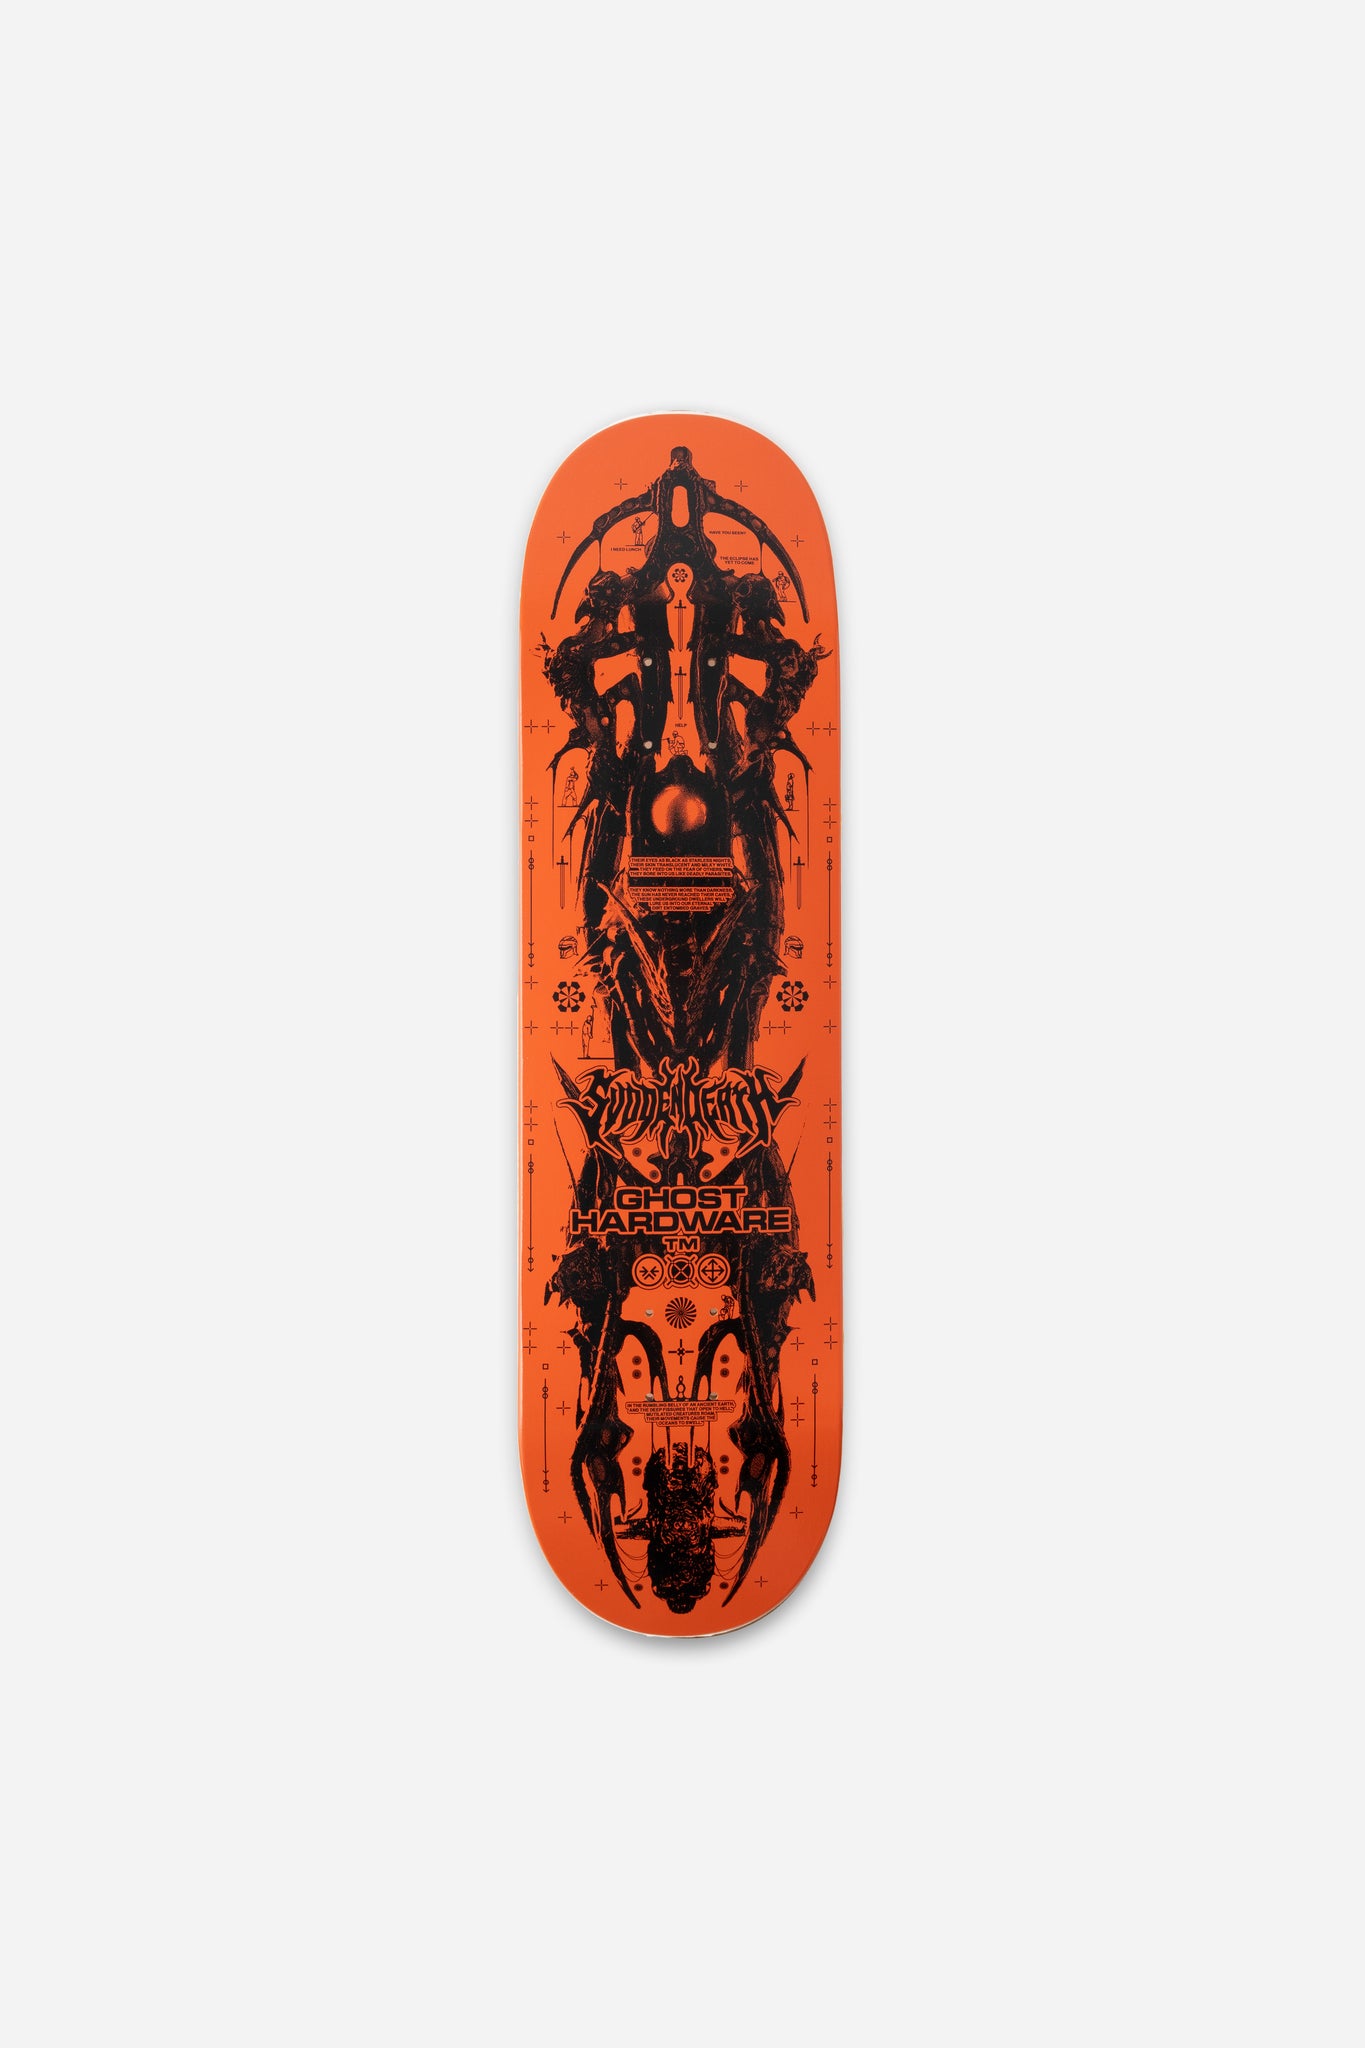 Svdden Death x Ghost Hardware Skateboard Deck